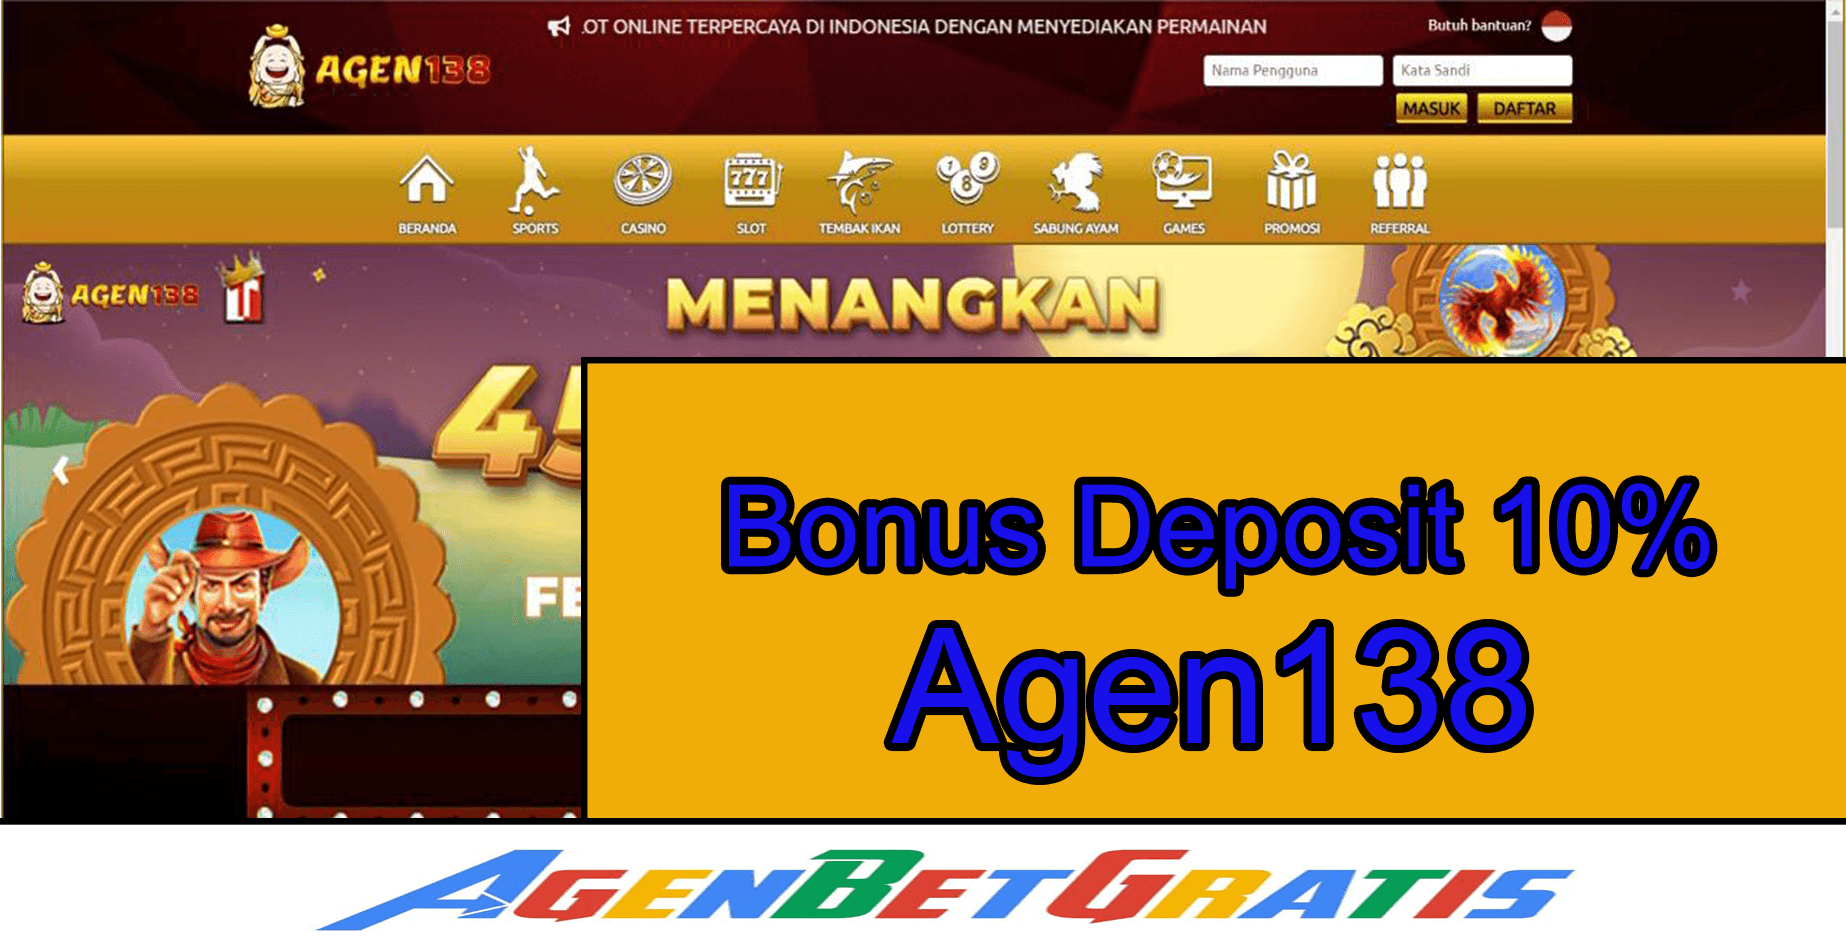 AGEN138 - Bonus Deposit 10%